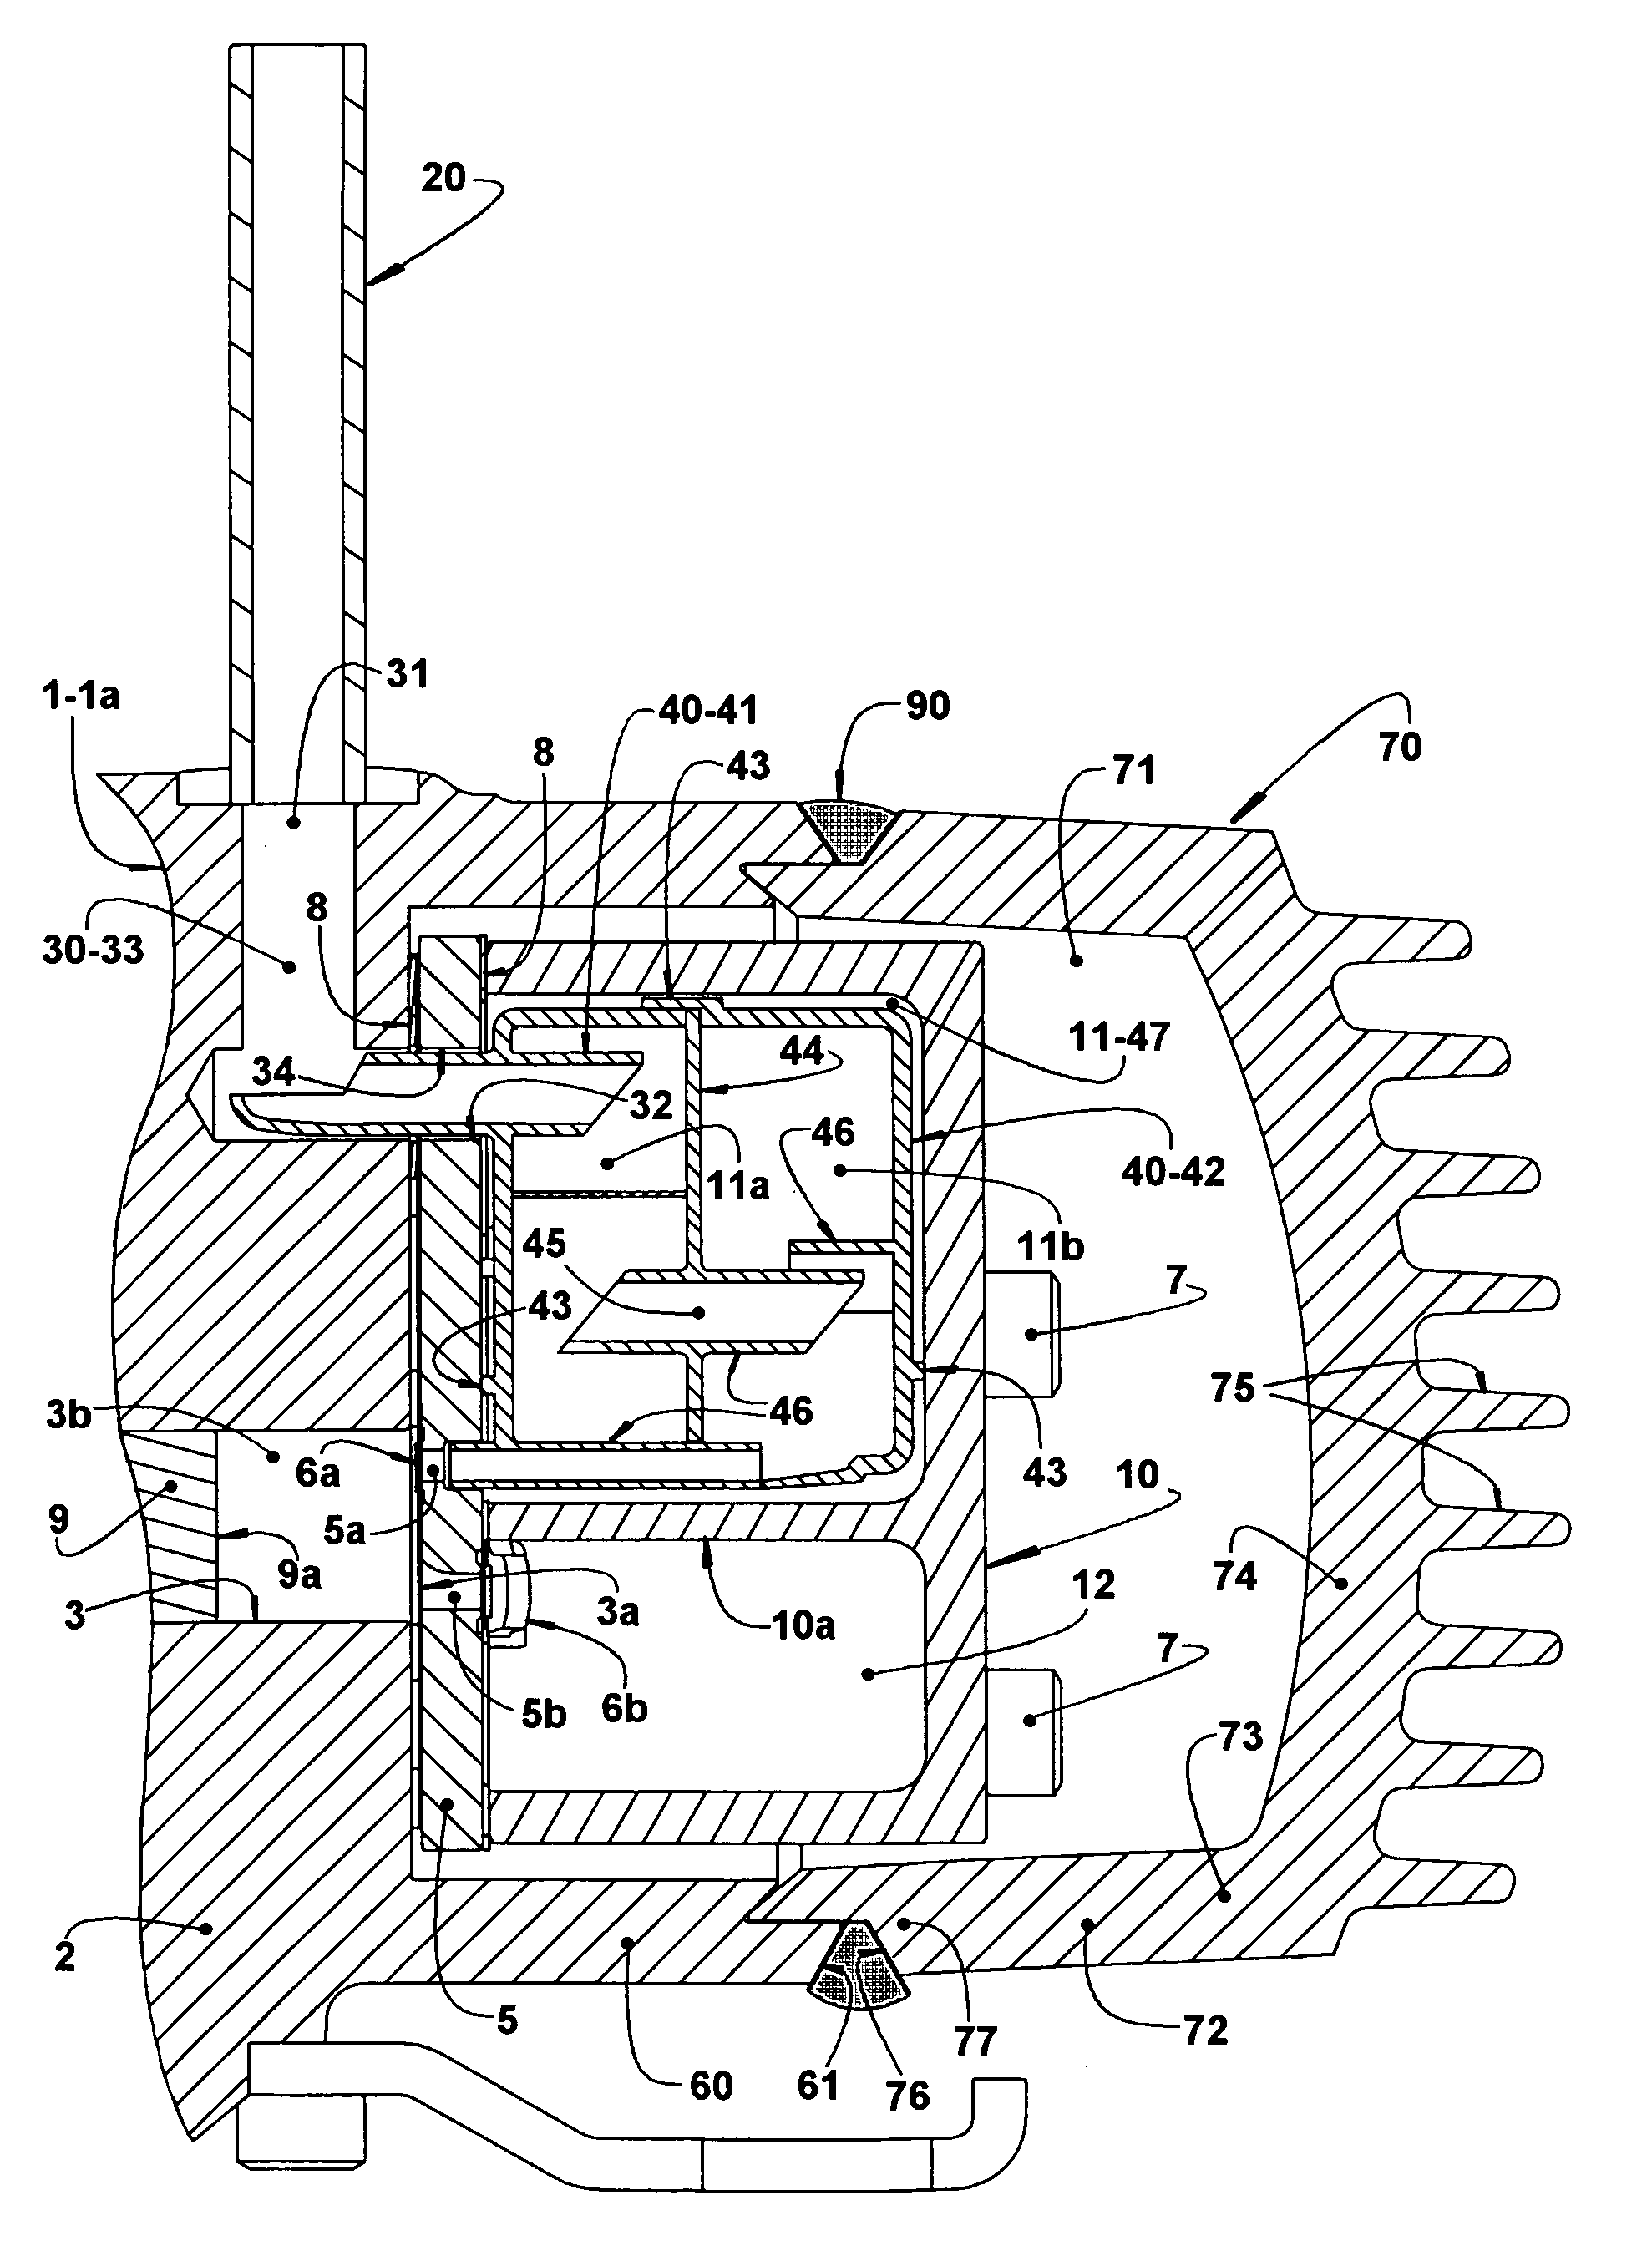 Suction arrangement for a hermetic refrigeration compressor